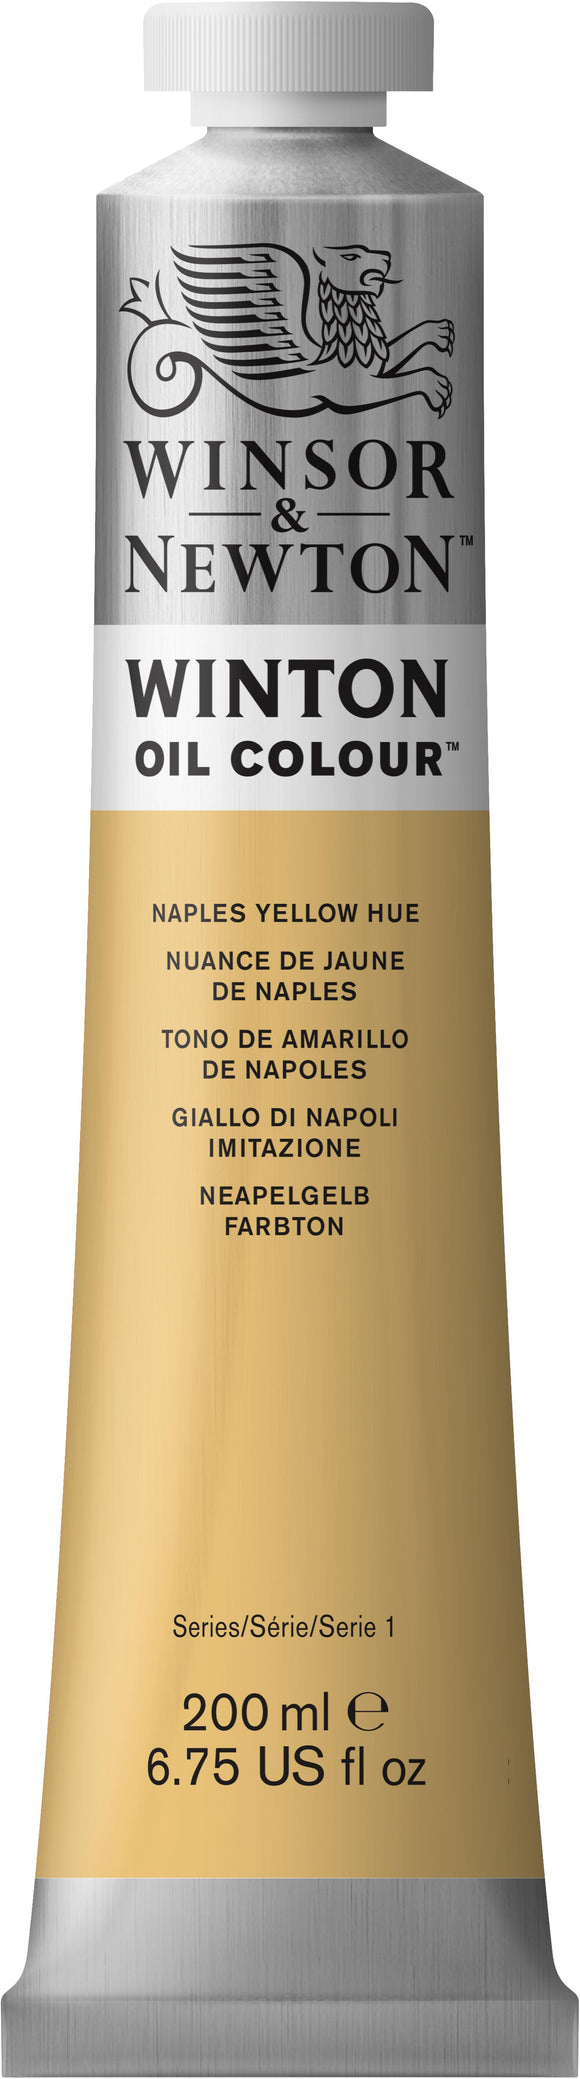 Winsor & Newton Winton Oil Colour Naples Yellow Hue 200Ml